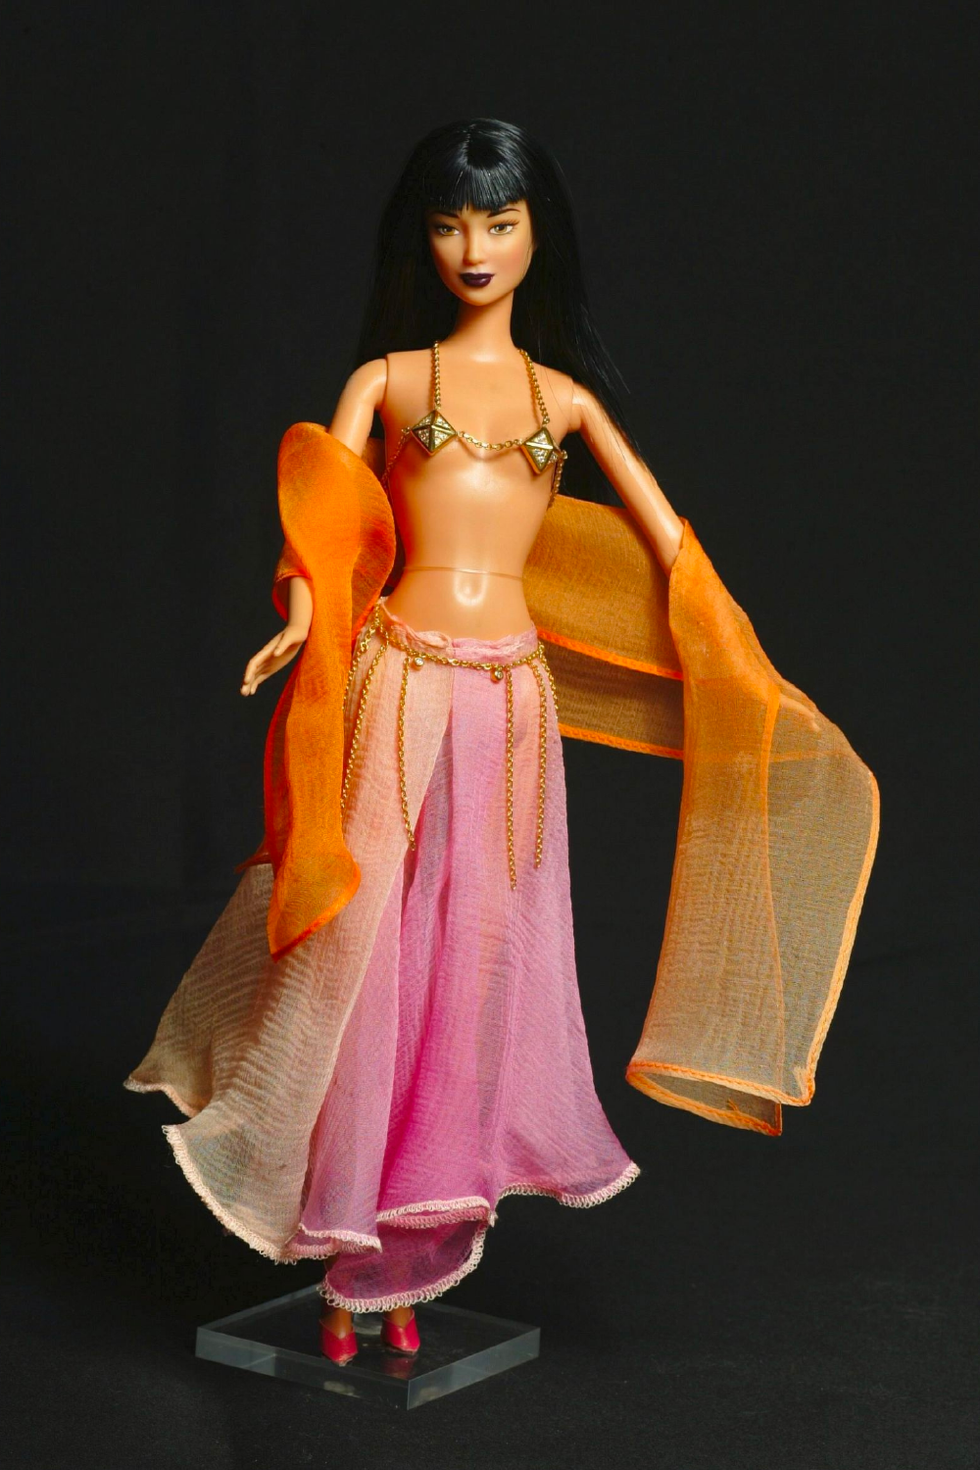 1999) Barbie Airplane, BOX DATE: 1999 MANUFACTURER: Mattel…